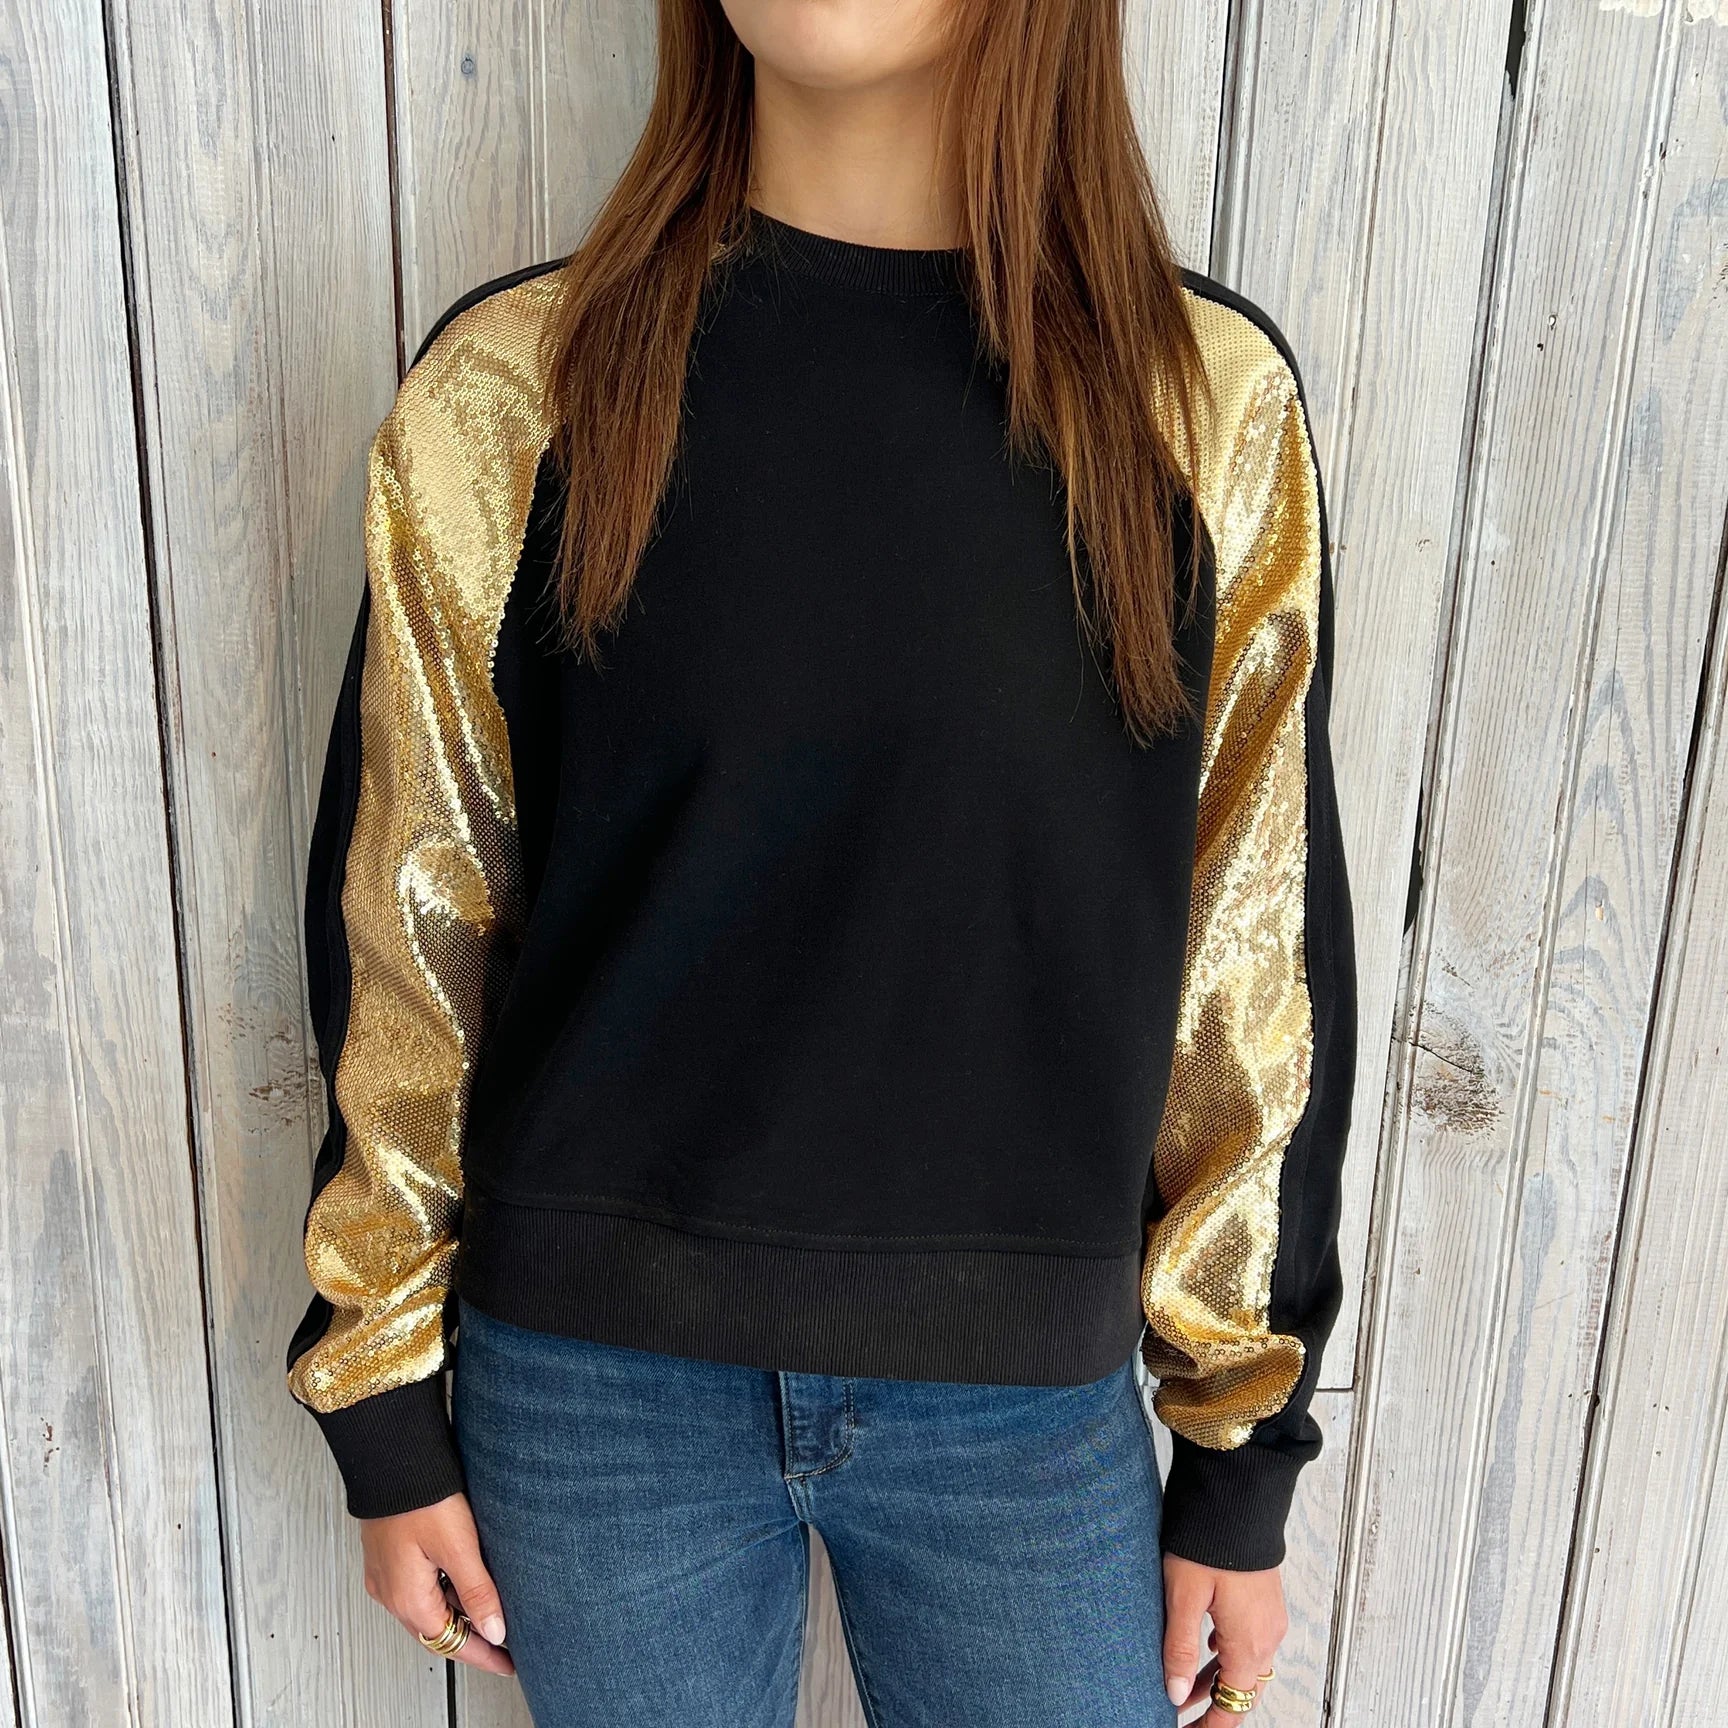 Nolaverse Black Sweatshirt with Gold Sequins